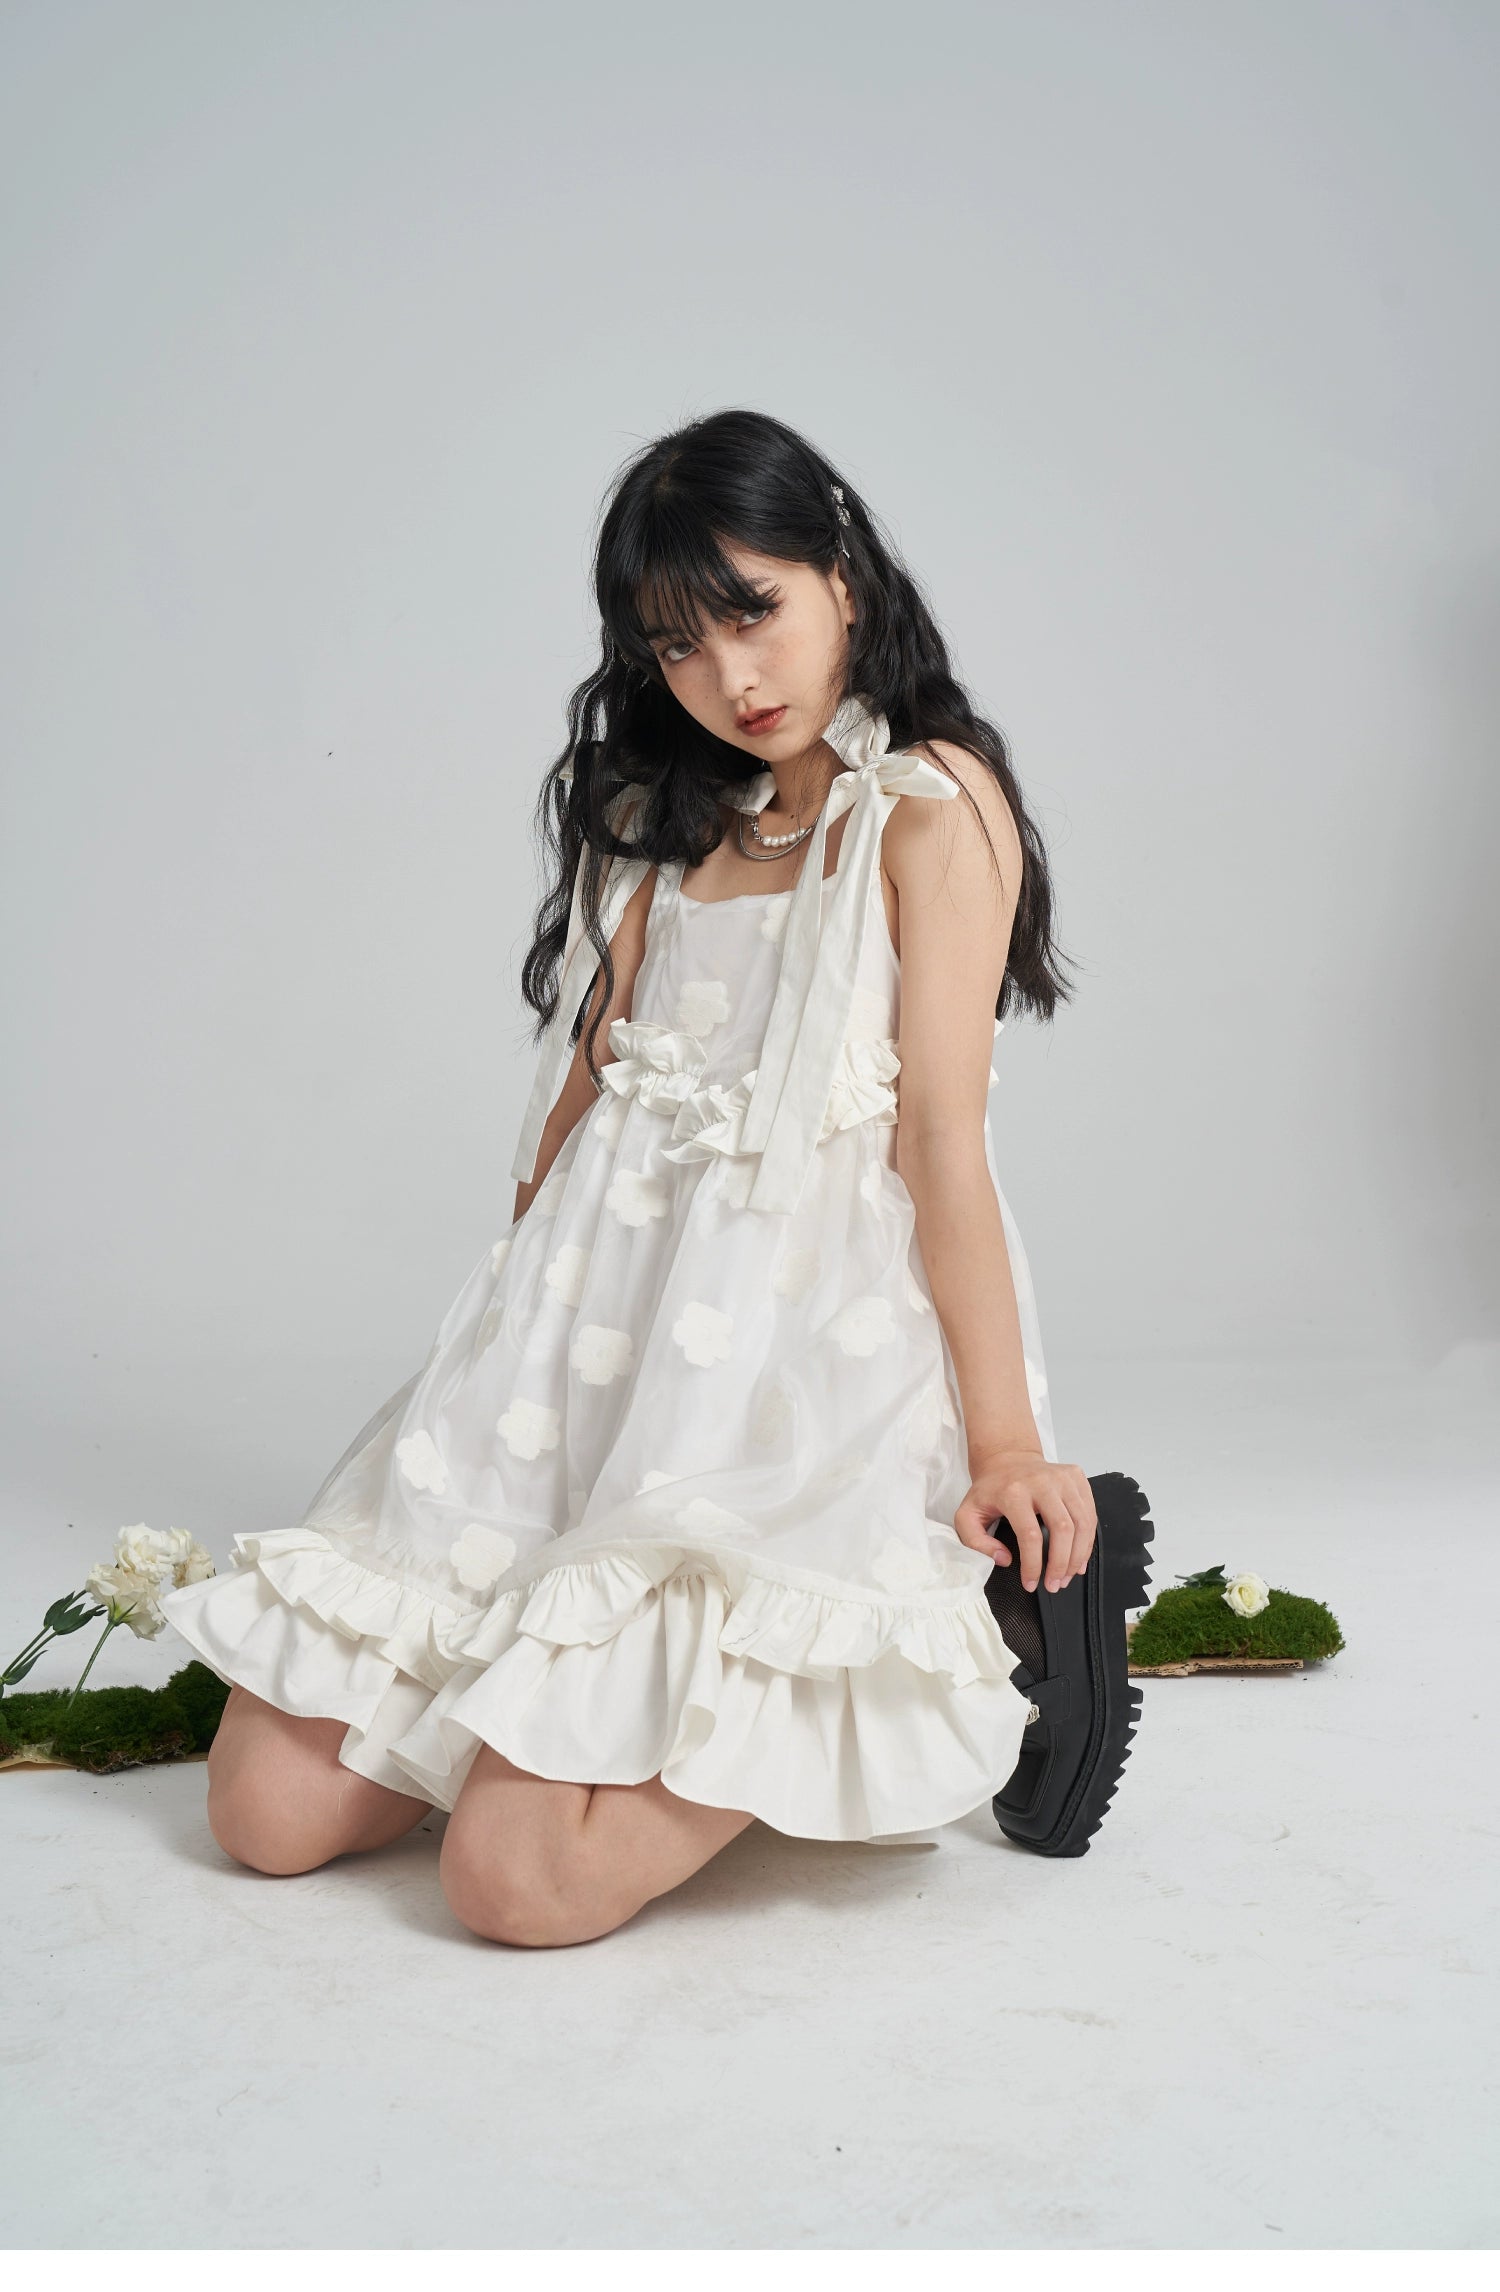 Sweetheart White Picnic Dress